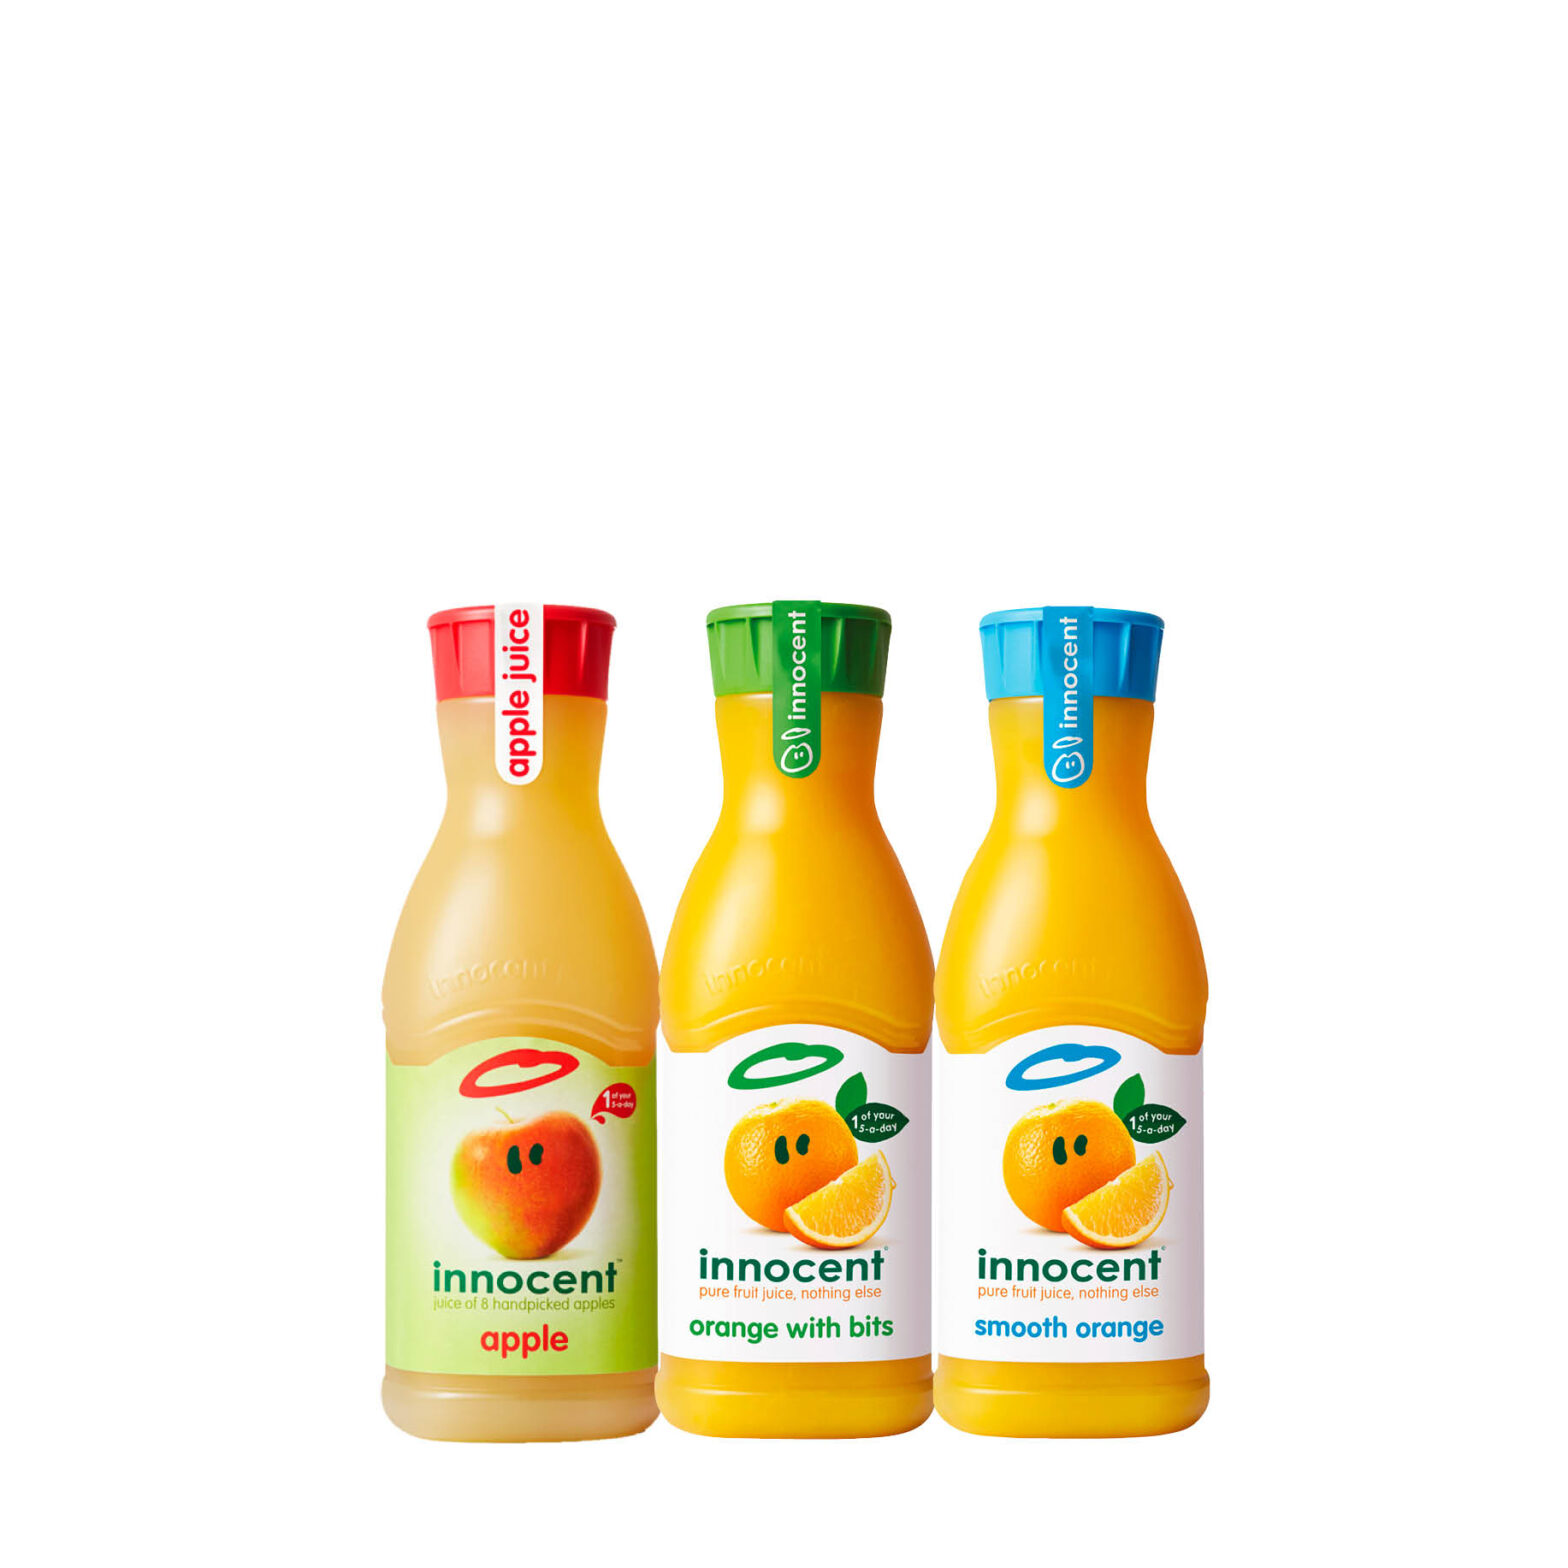 Innocent Apple / Orange Juice With Bits / Orange Juice Smooth